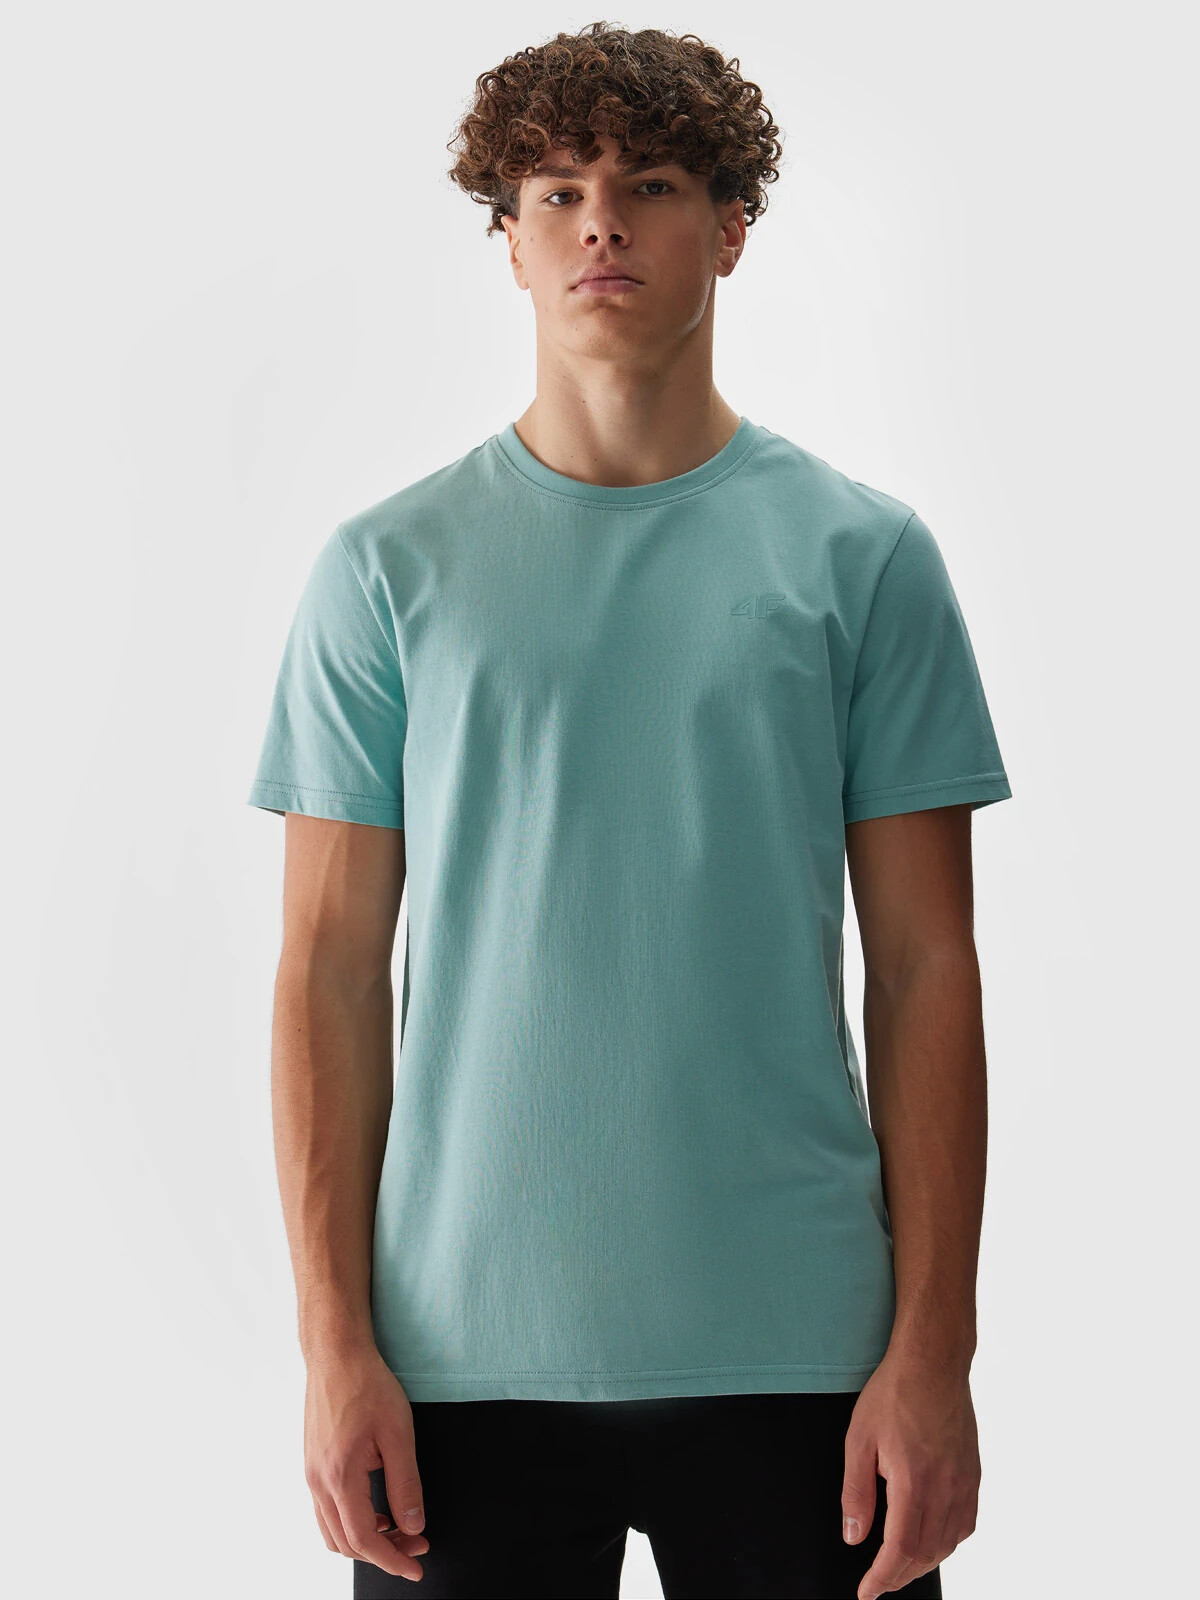 Men's Plain T-Shirt Regular 4F - Mint